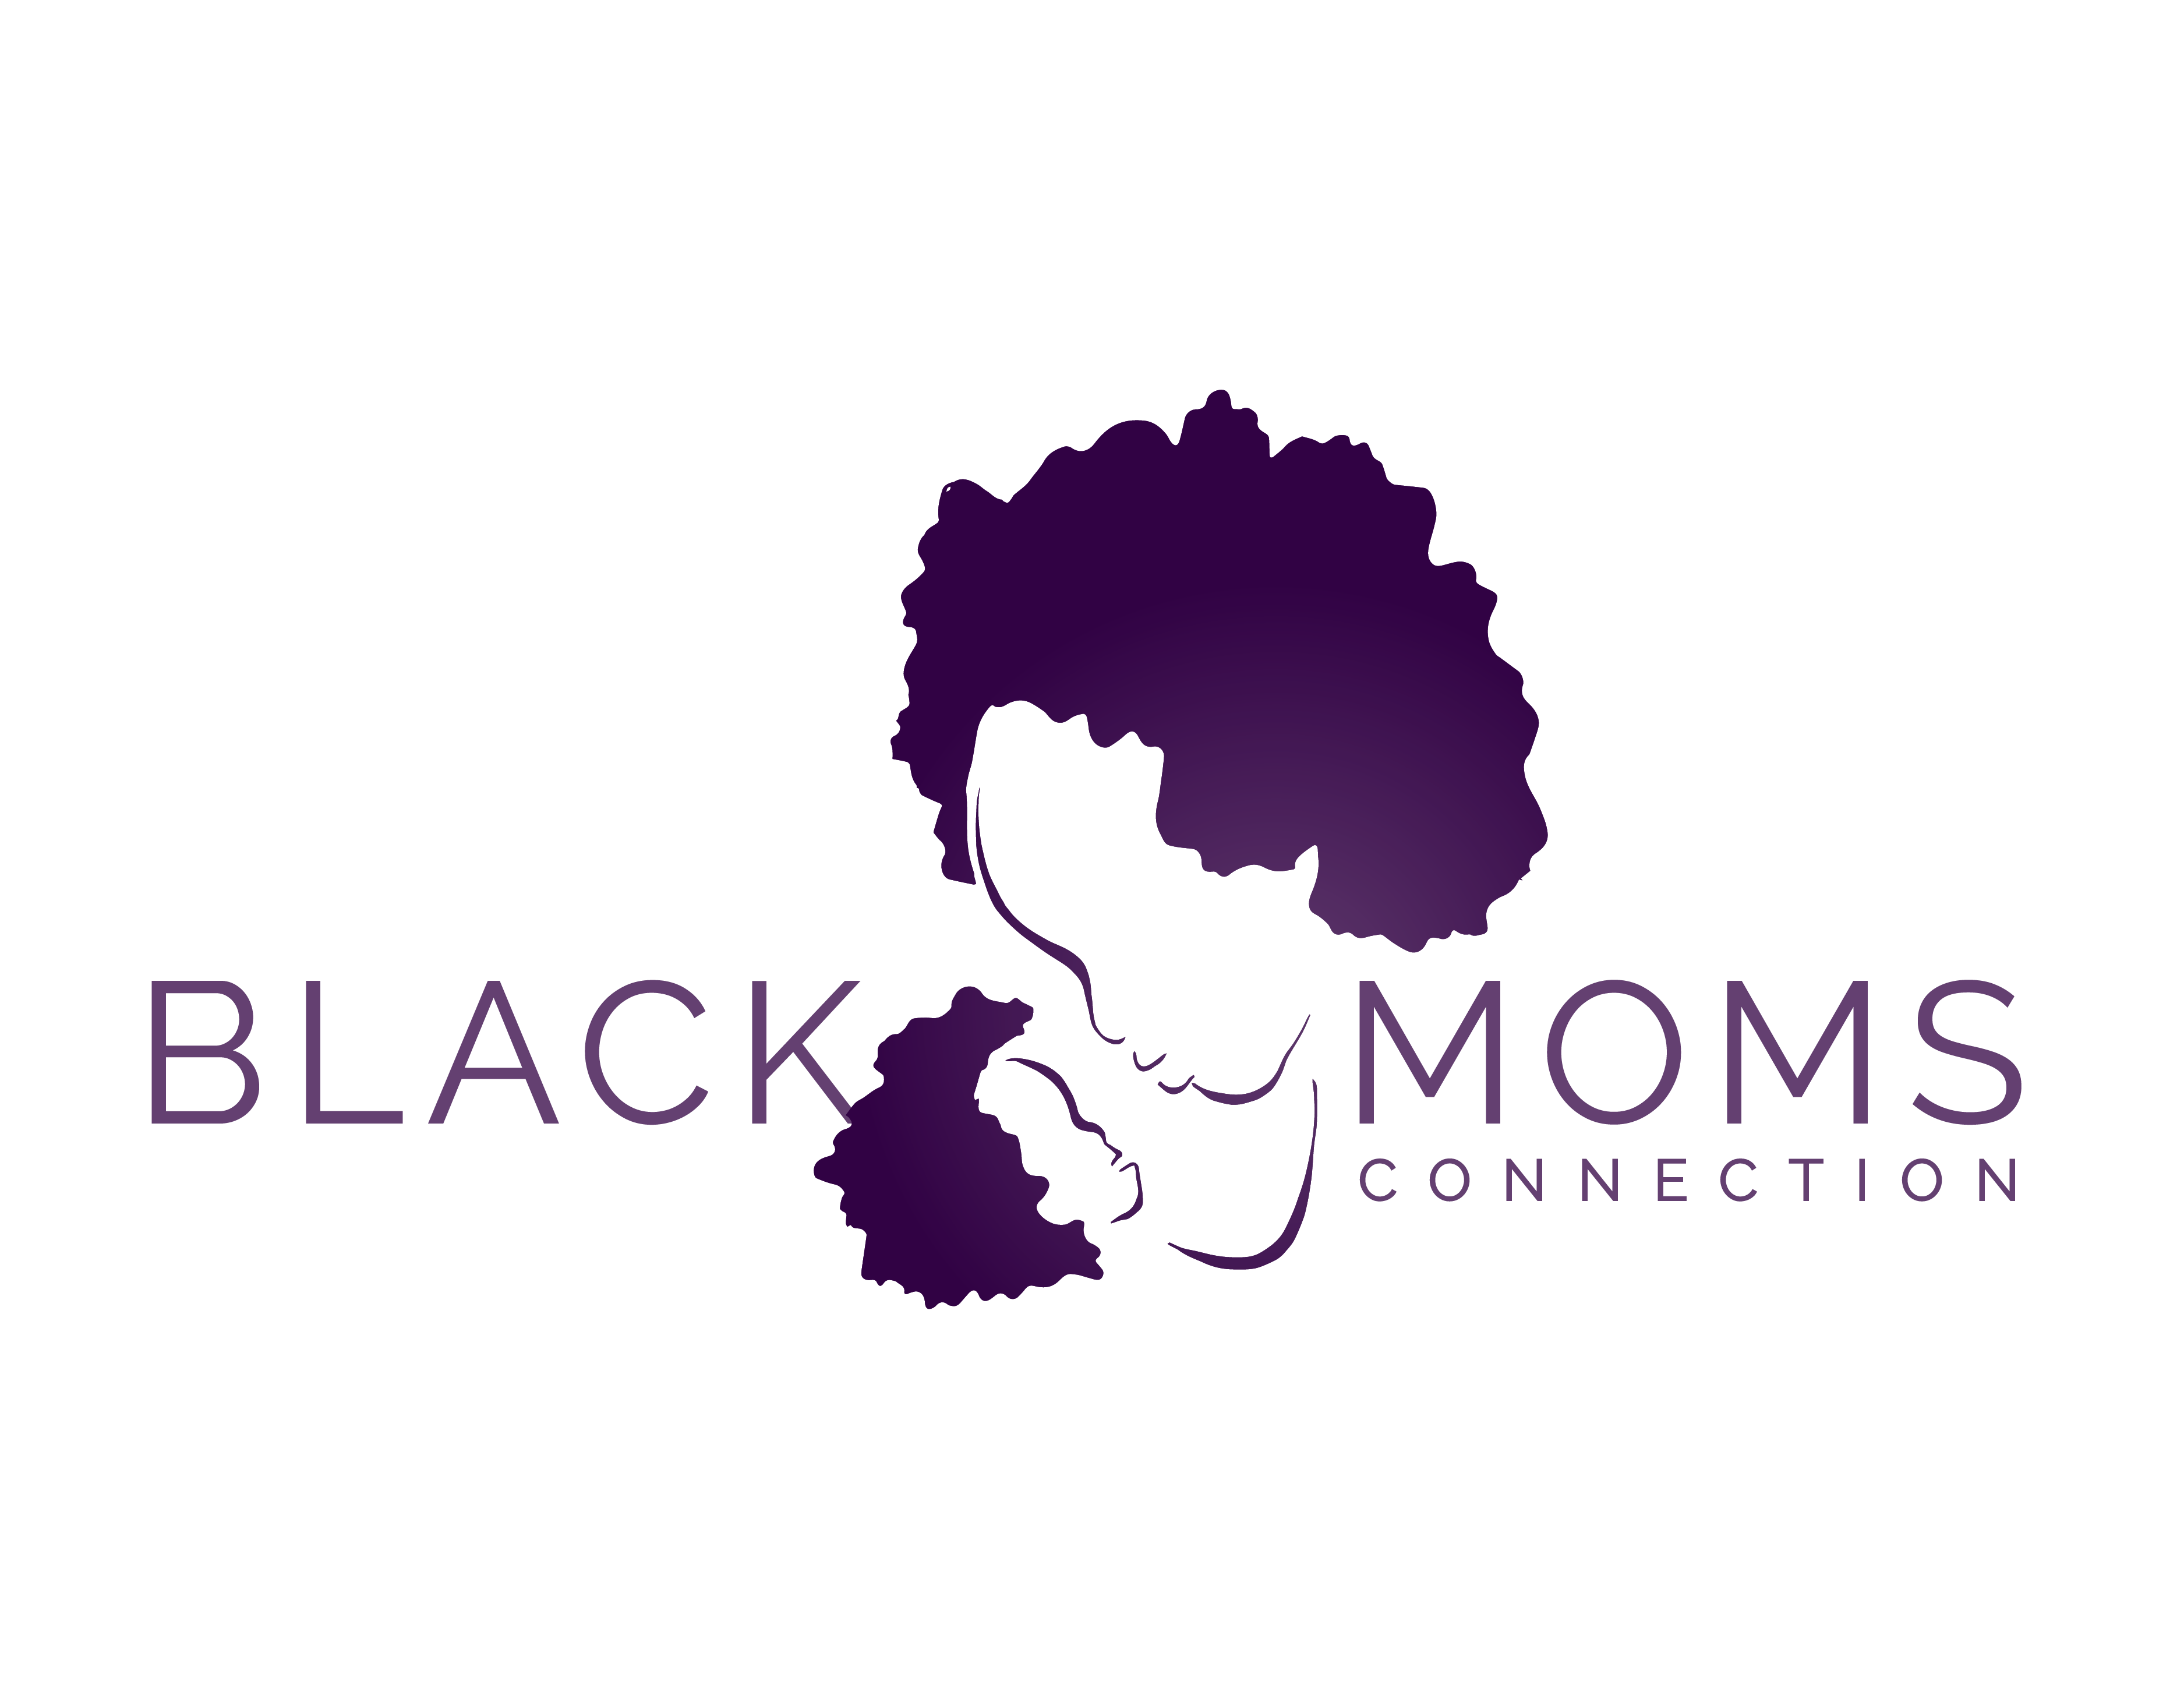 Black Moms Connection logo